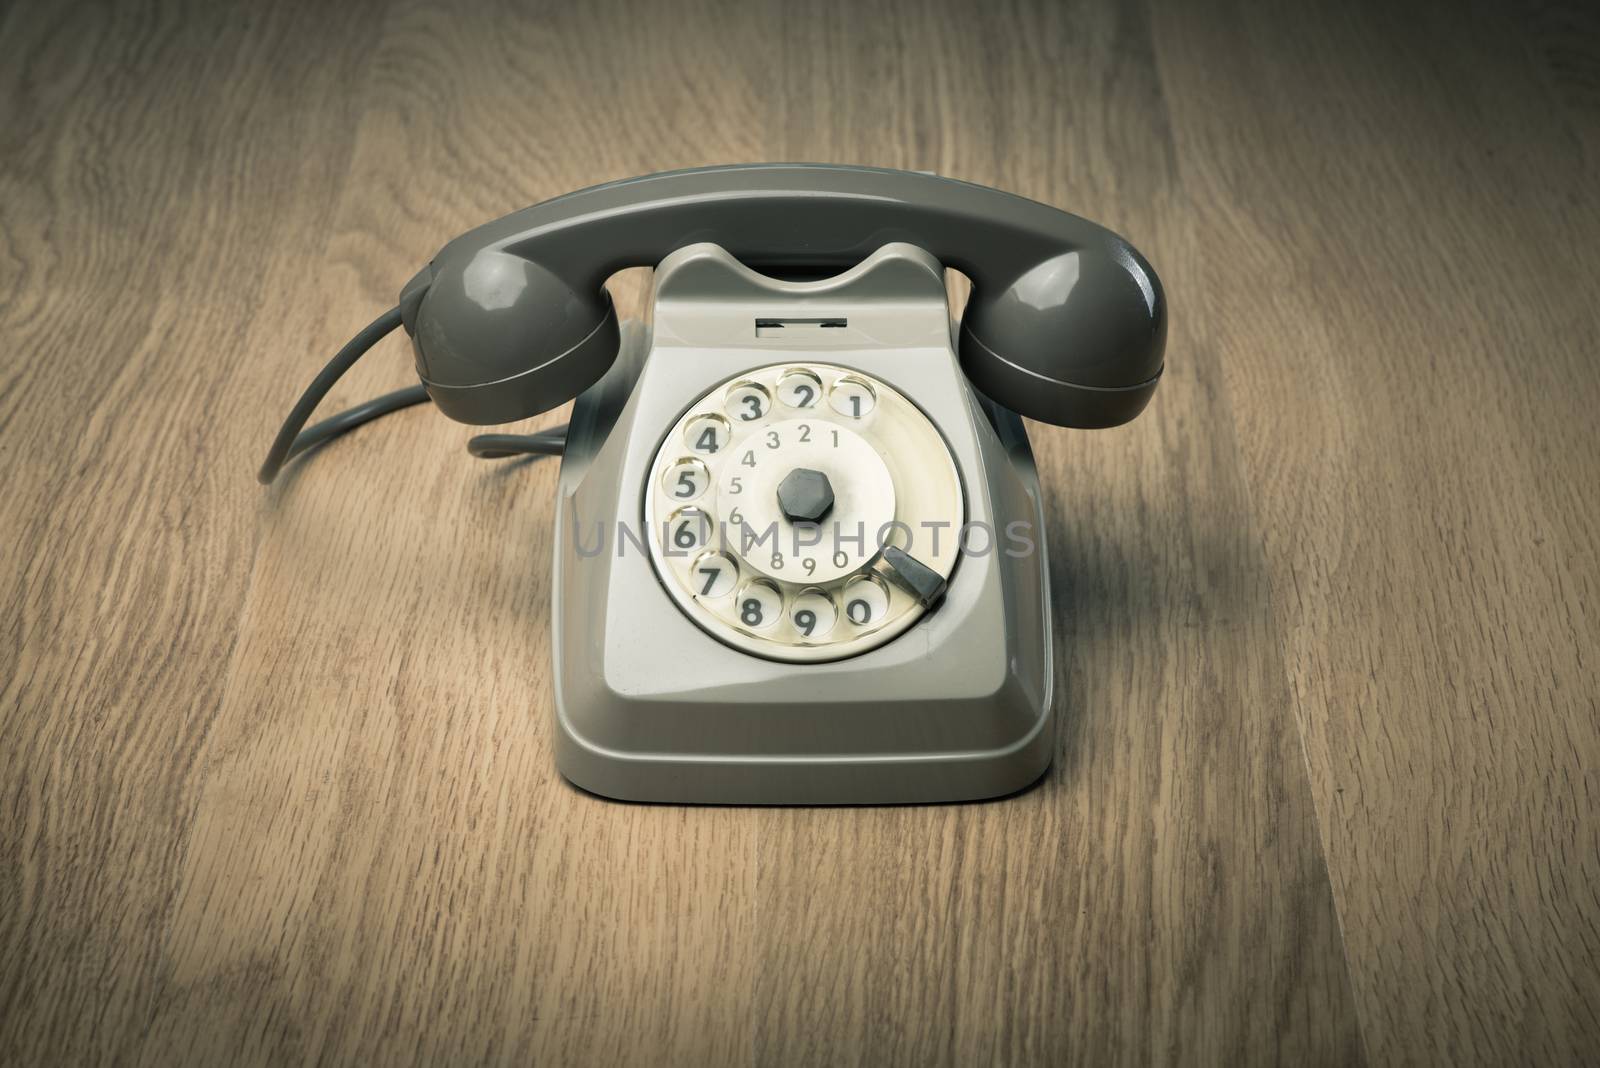 Vintage gray telephone on hardwood surface desk or floor.